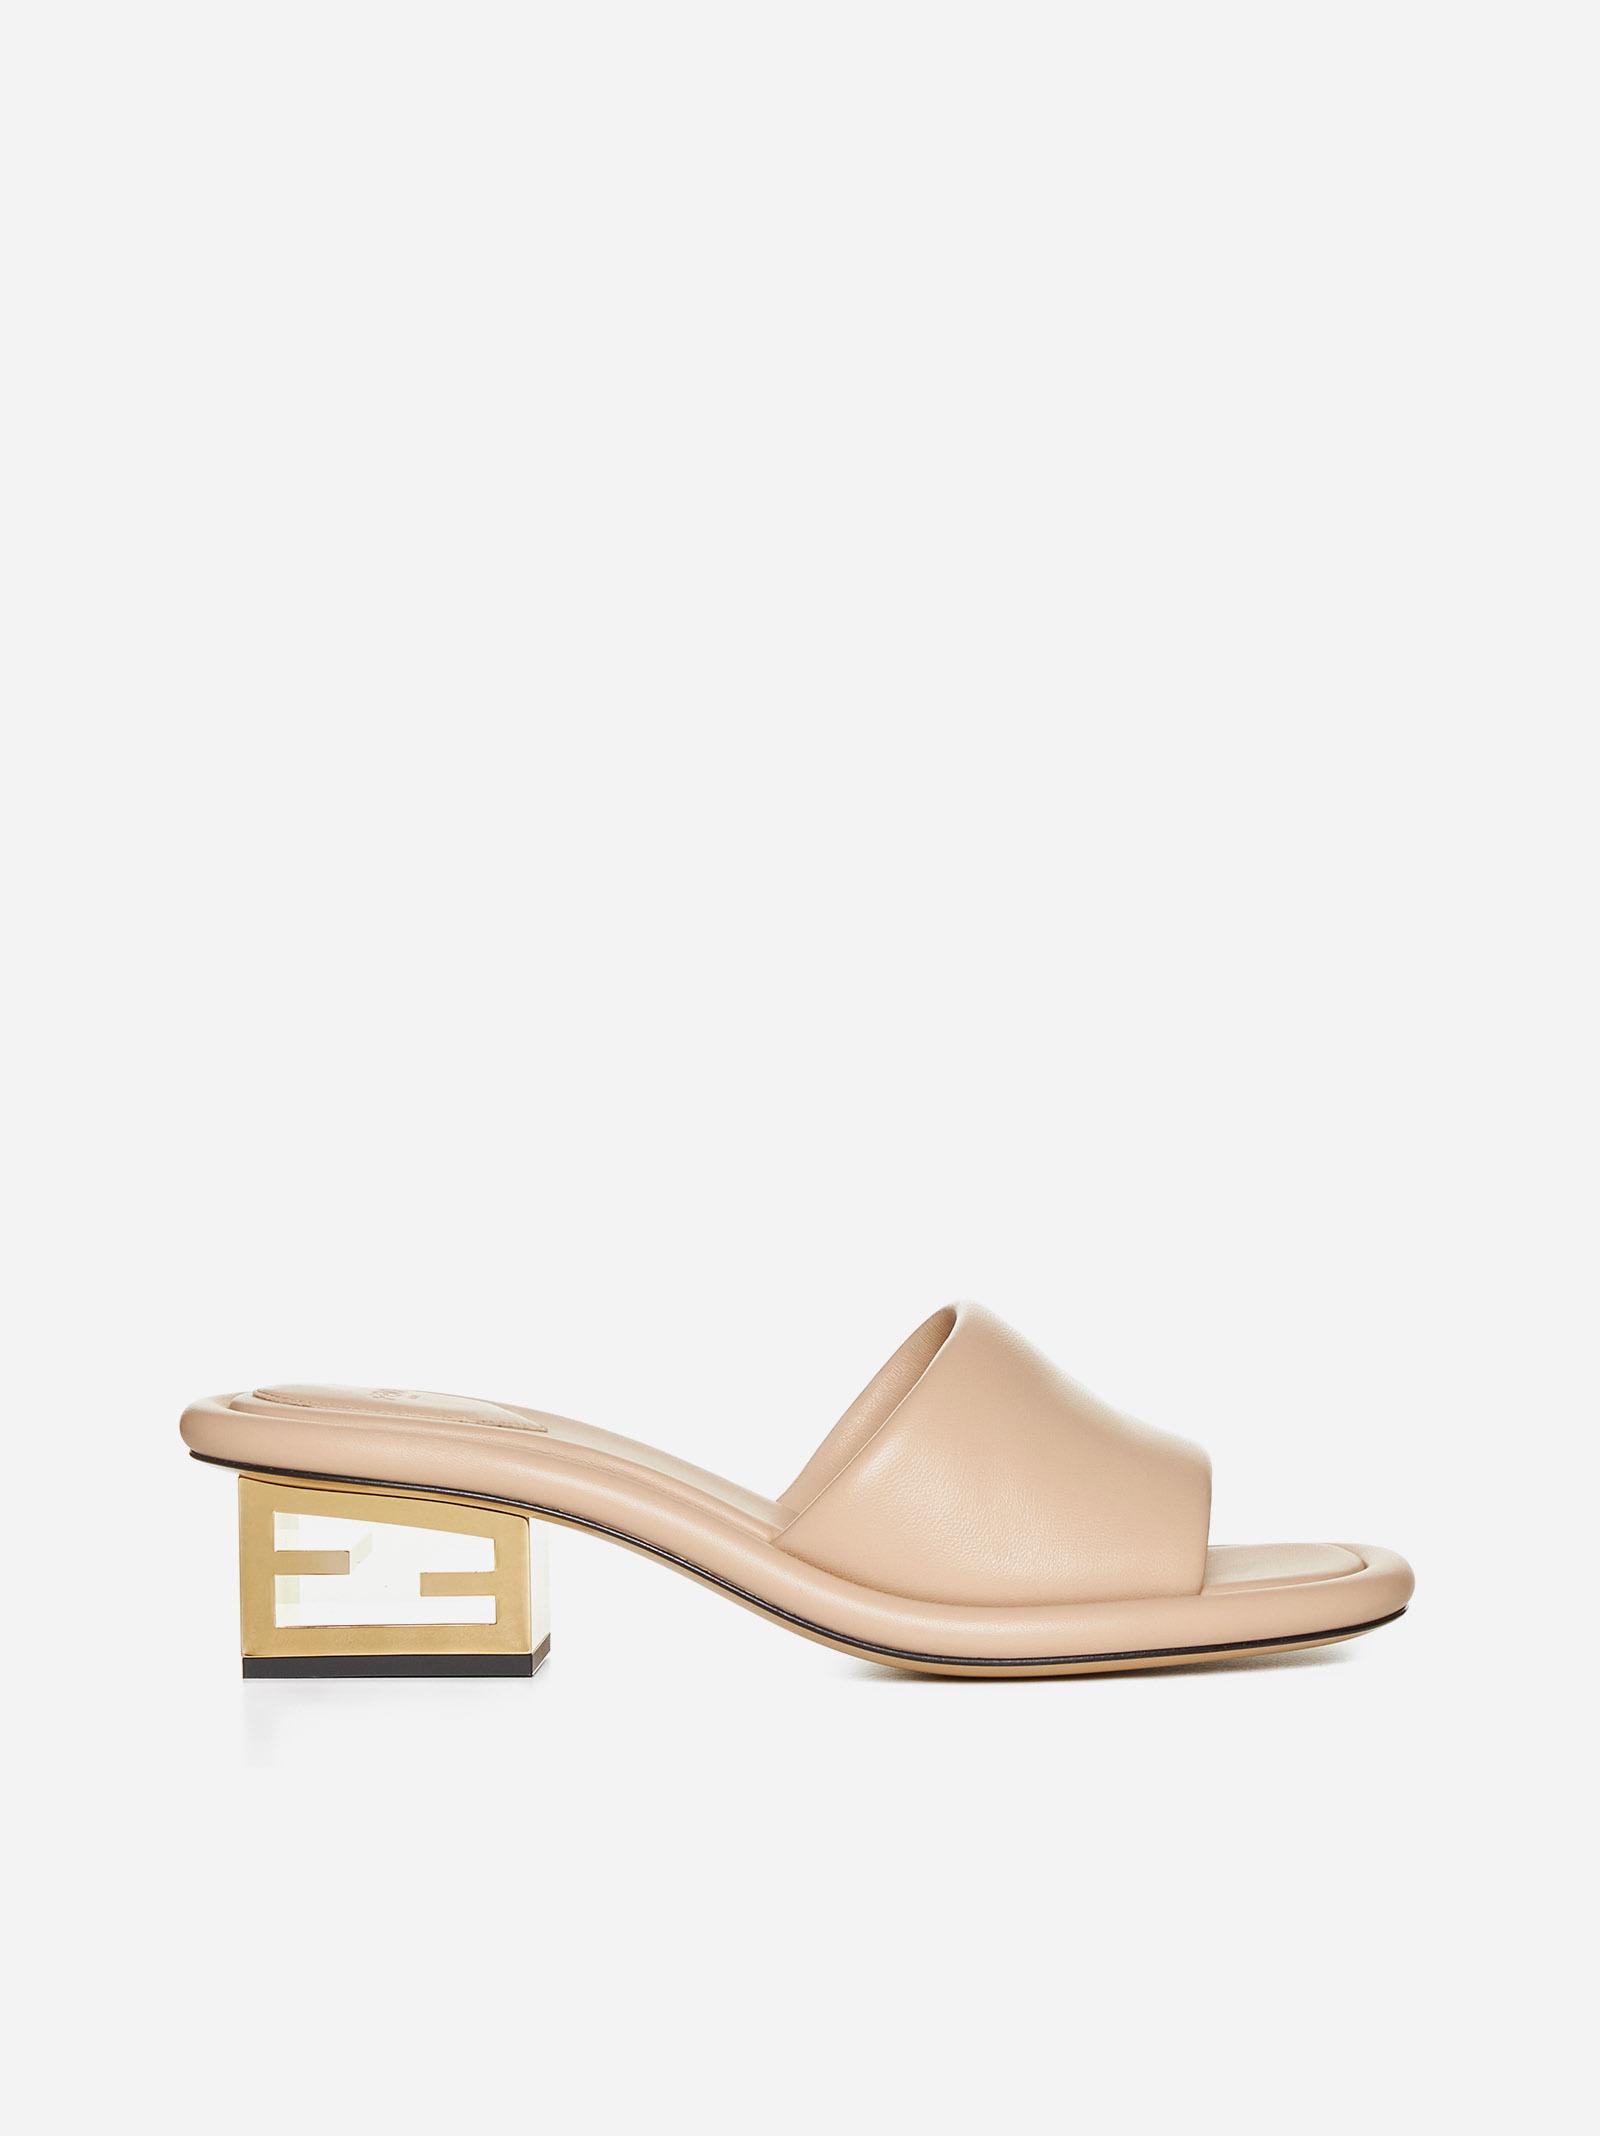 Fendi Baguette Nappa Leather Sandals